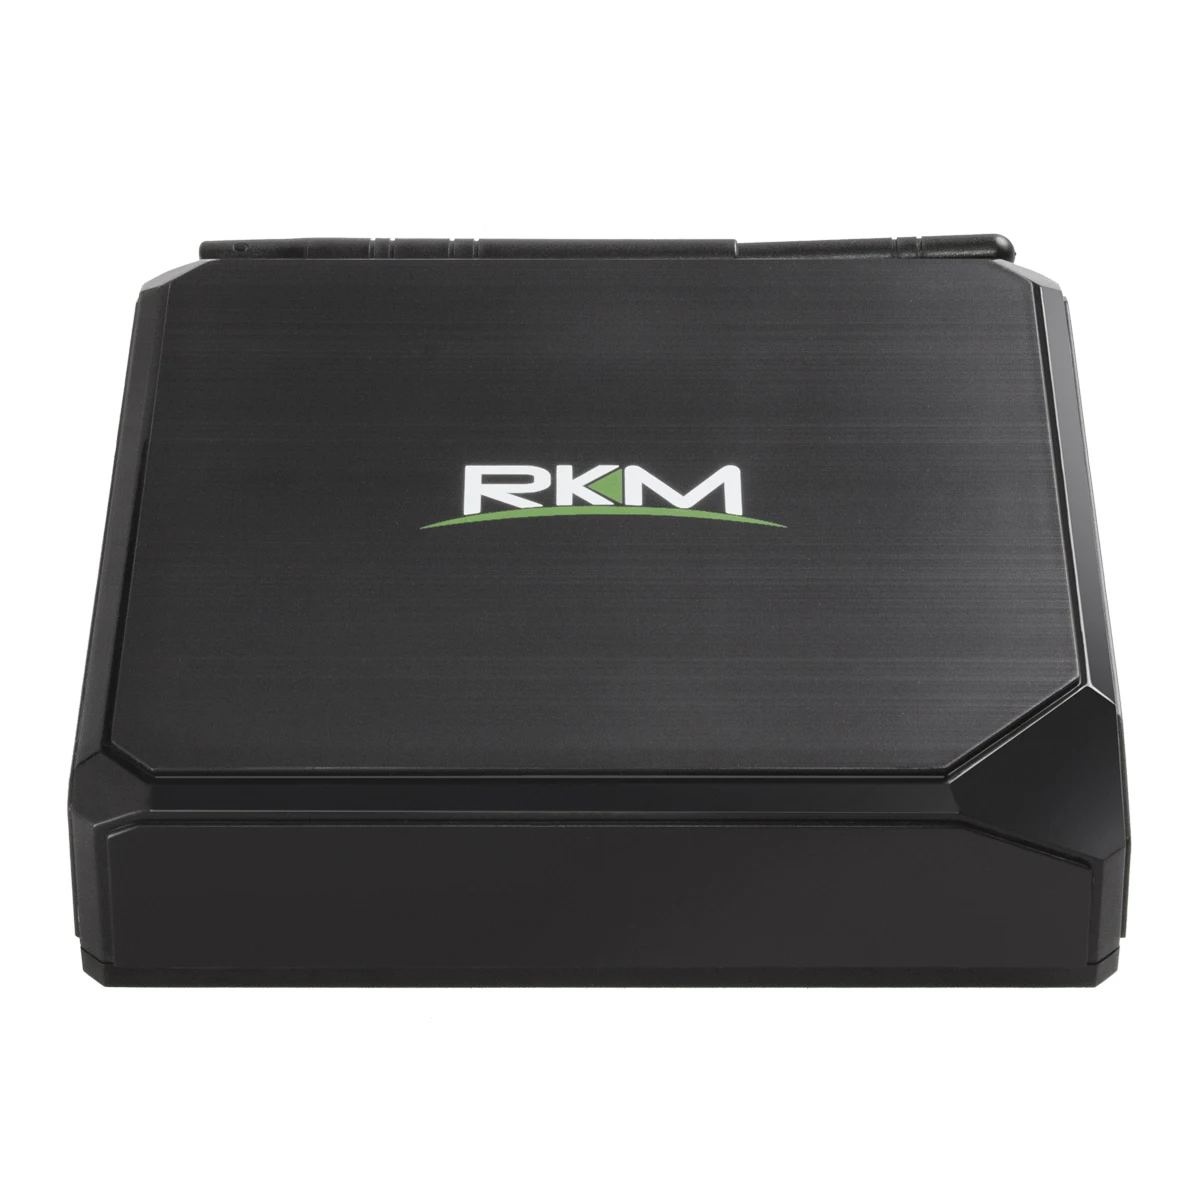 Android9.0 TV BOX RKM MK39 Rockchip RK3399 4 GB 32 GB 802.11 AC 2.4 G 5G 1000M LAN USB3.0 Typ-c Digitálne Tabule Media Player